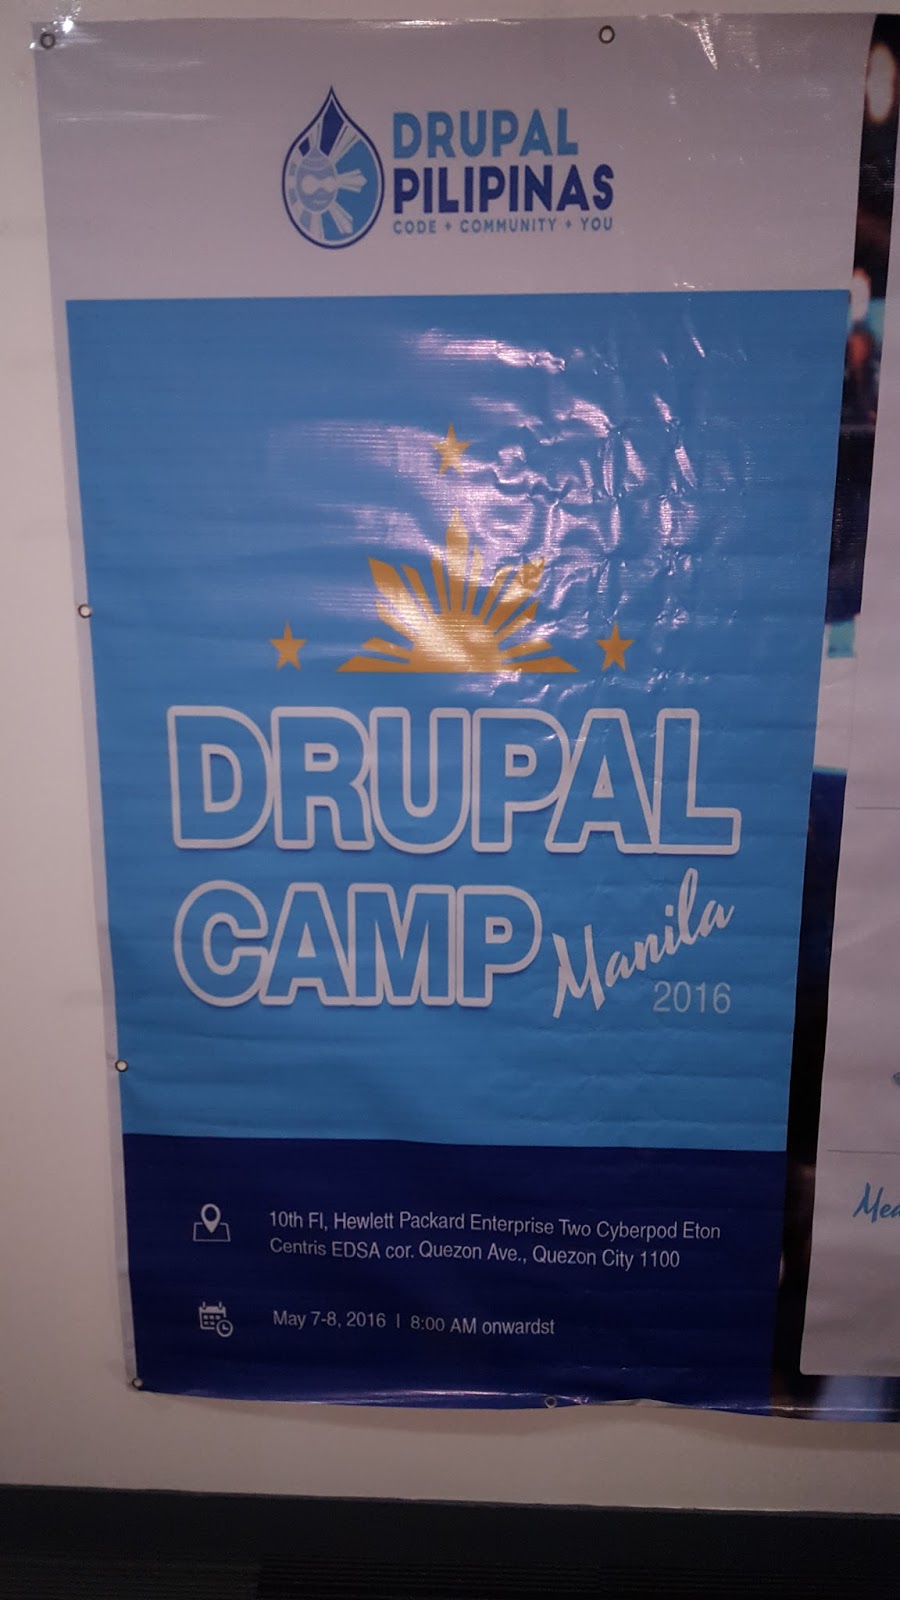 Drupalcamp Manila 2016